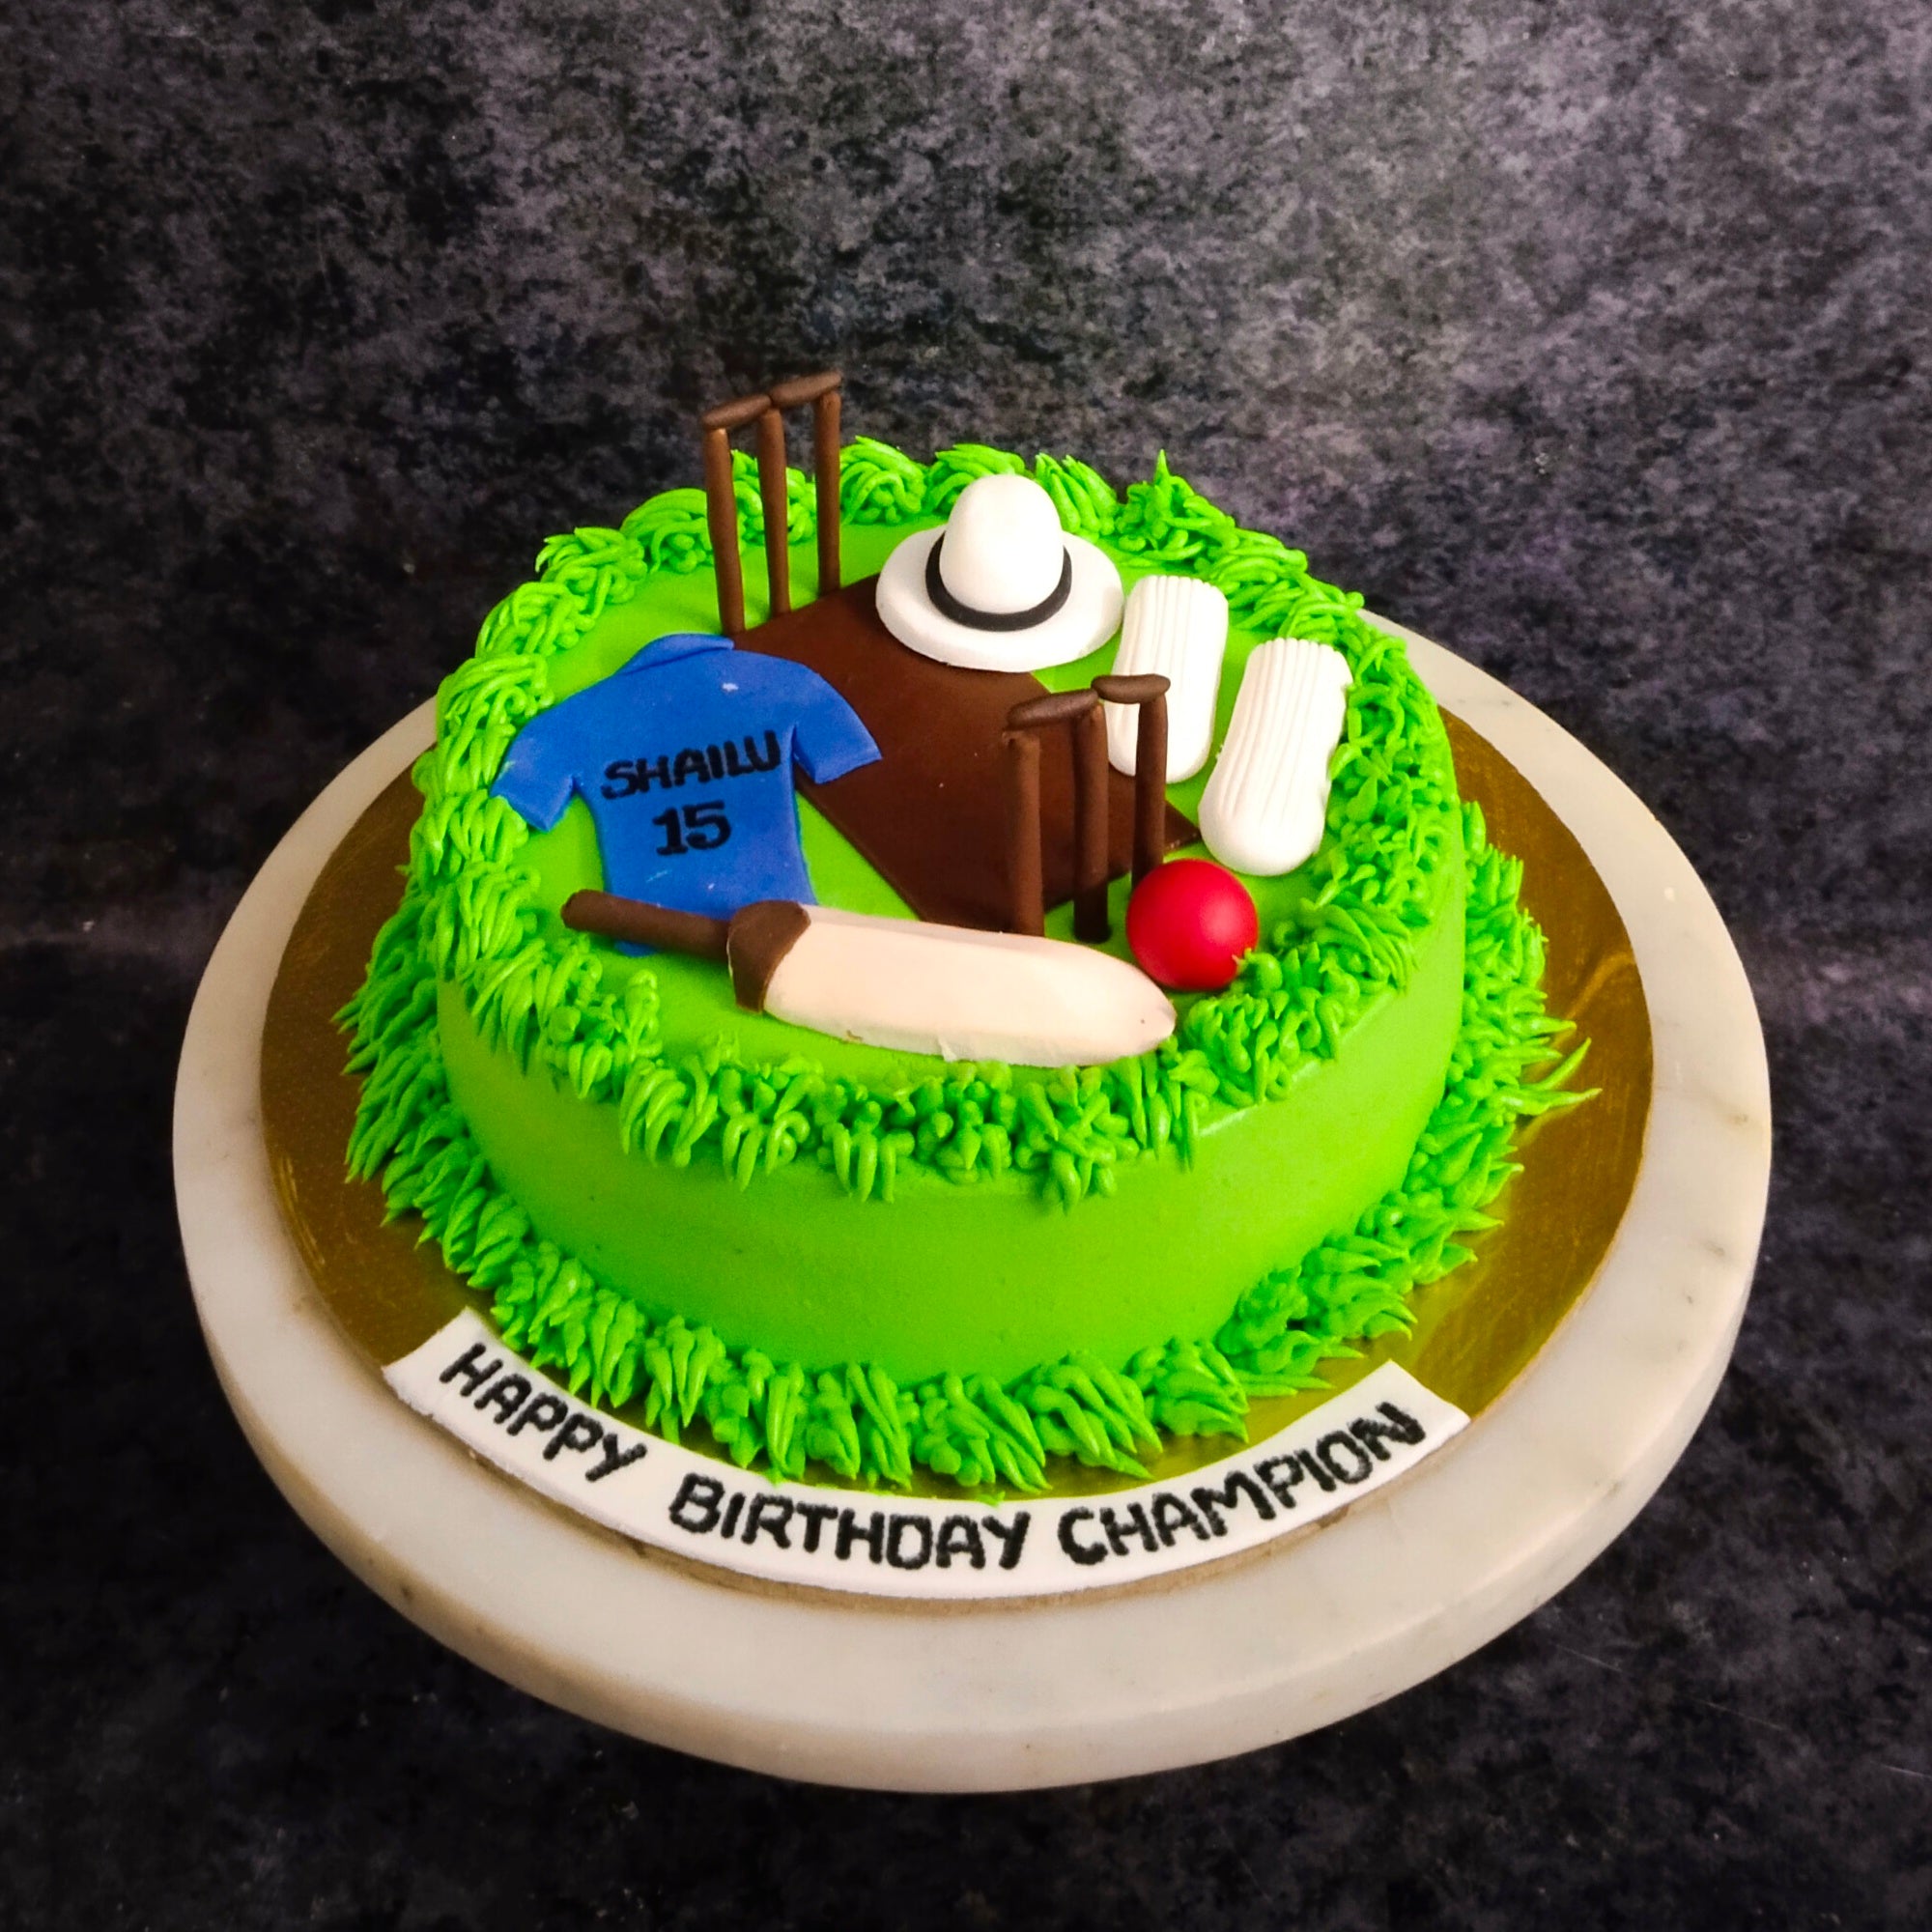 Cricket pitch theme cake 1 kg